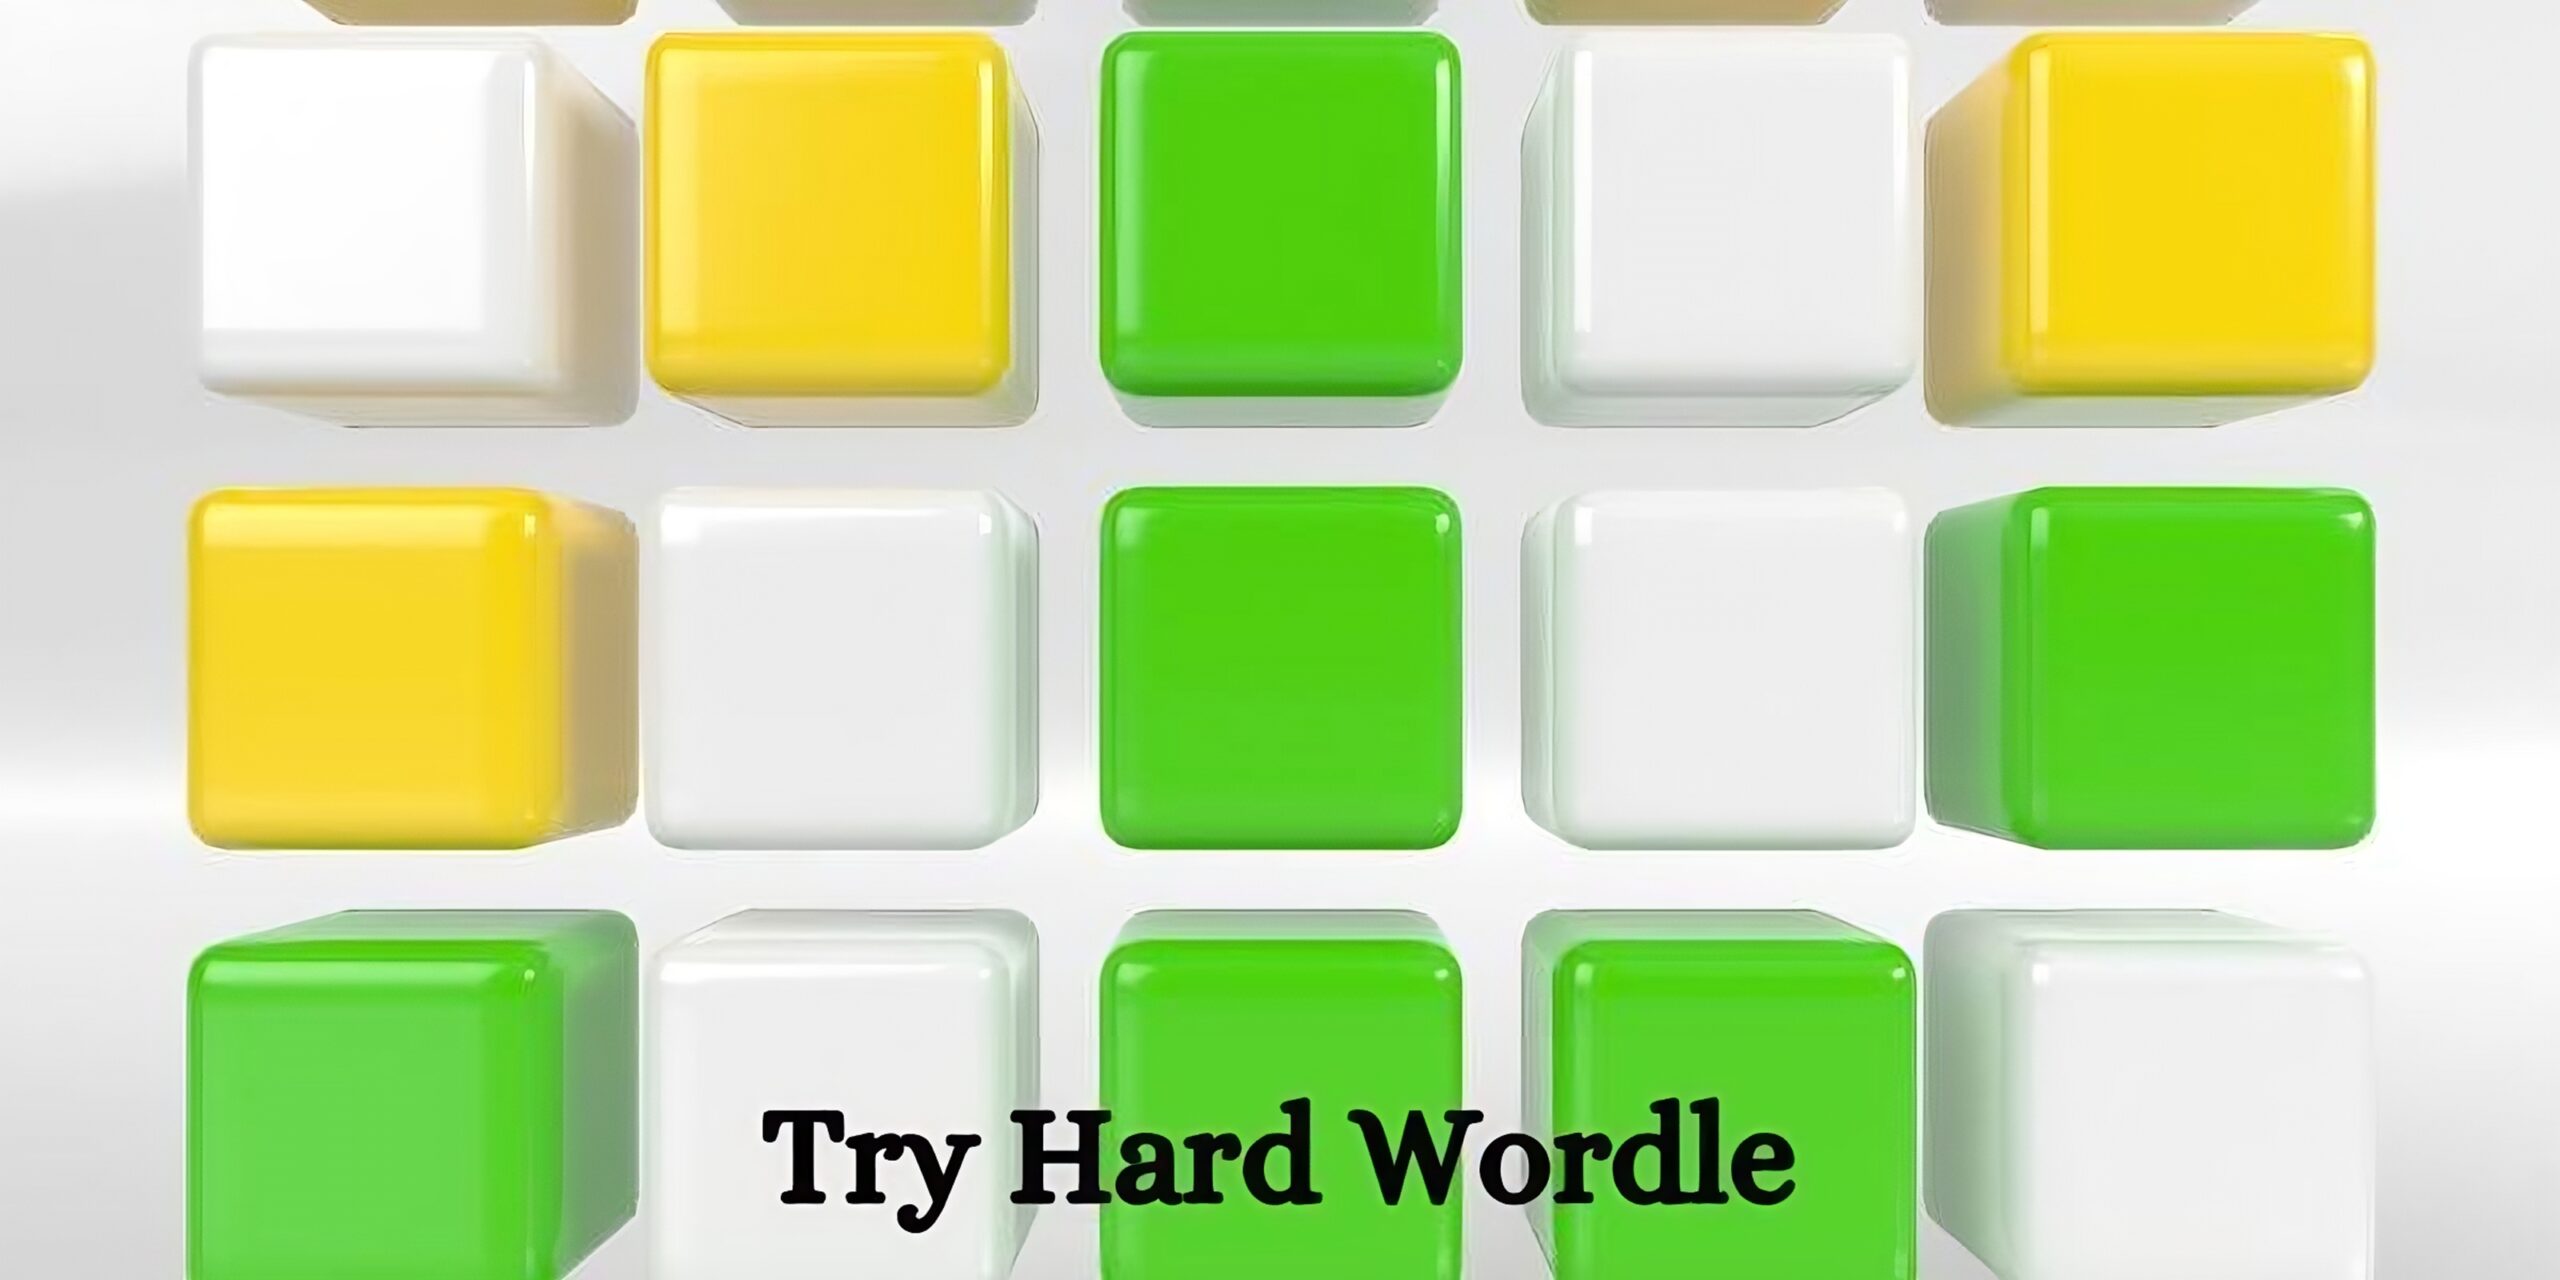 Try Harder Wordle